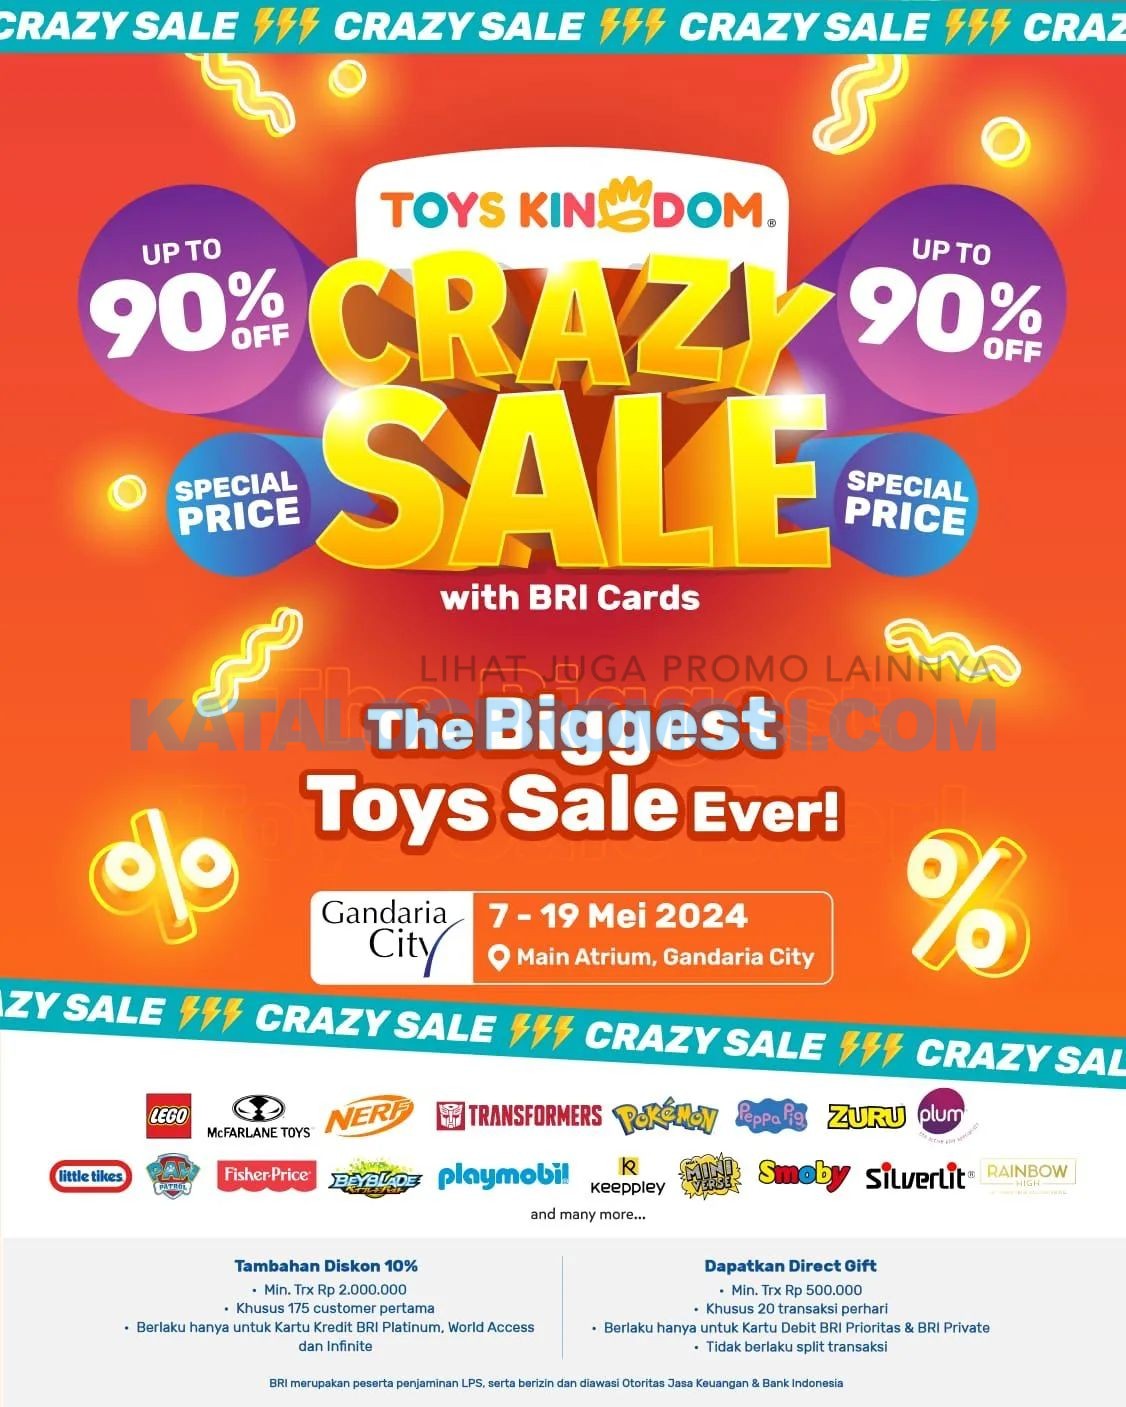 TOYS KINGDOM Crazy Sale di Pakuwon Trade Center Surabaya - DISKON HINGGA 90% hingga tanggal 19 Mei 2024 saja